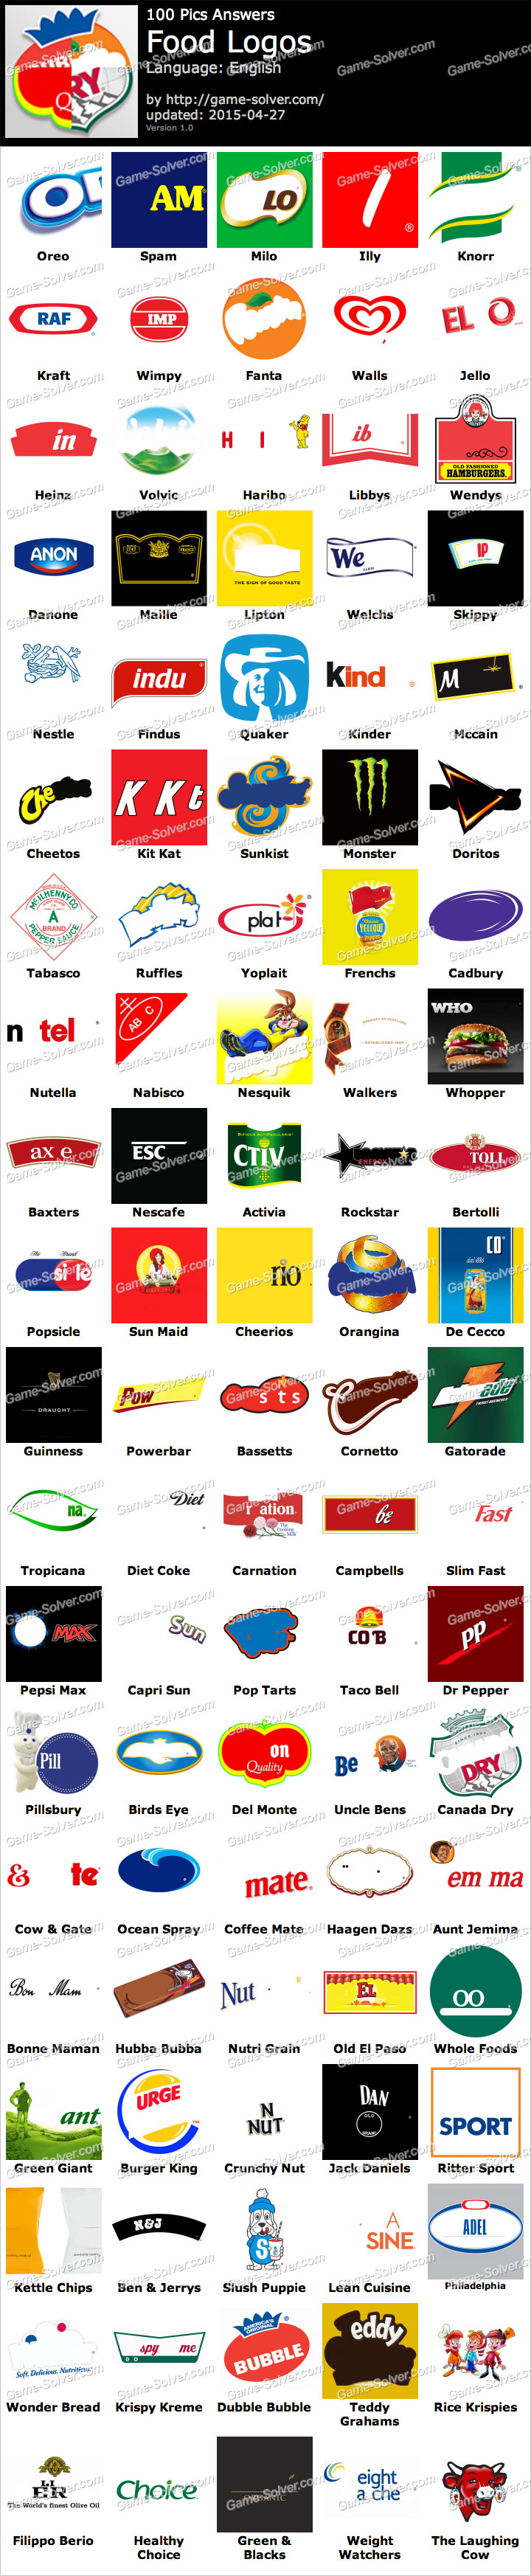 food logos quiz answers level 4